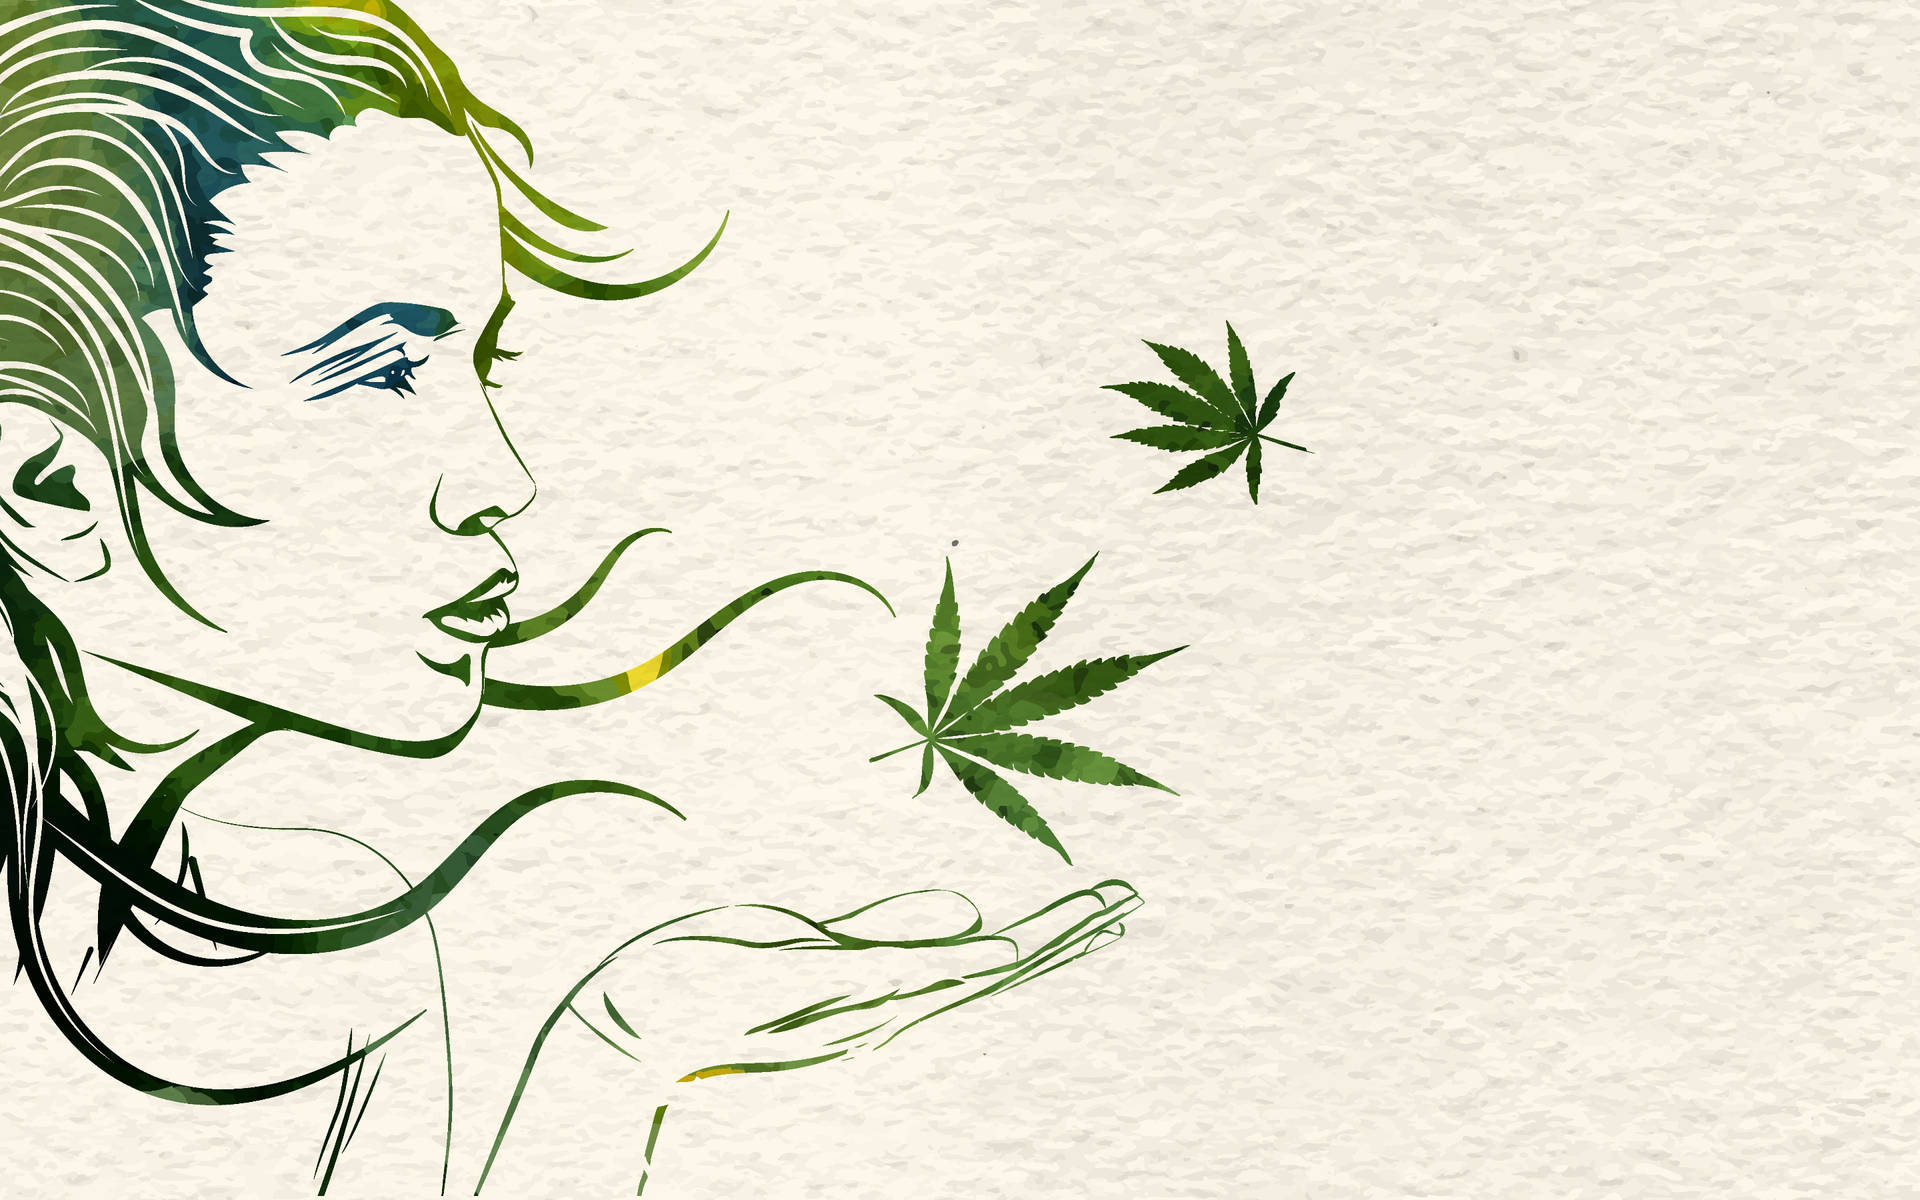 Digital Art Promo For Smoking Weed Background